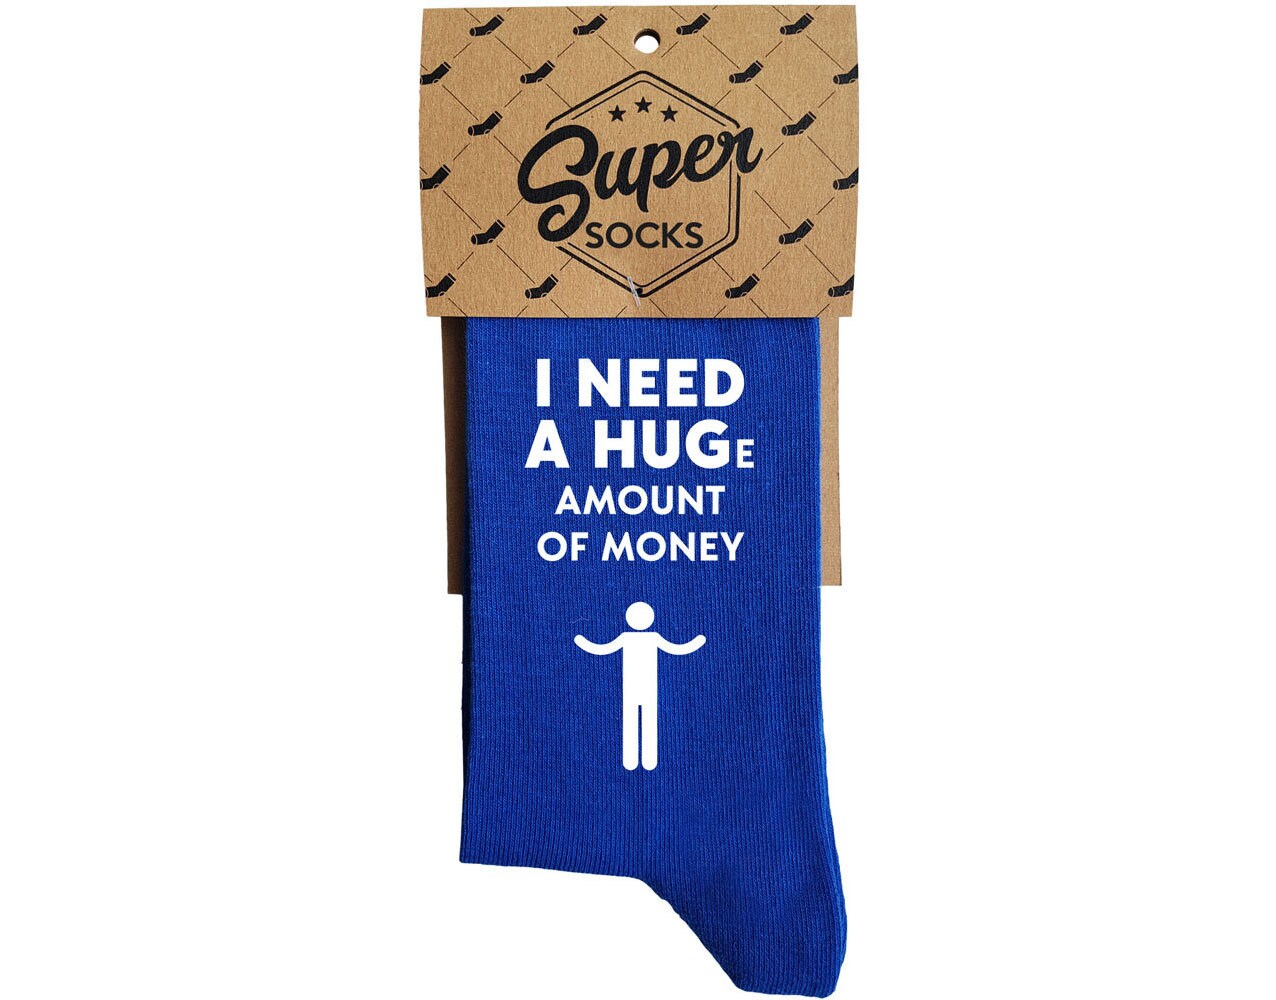 Funny socksI need a hug socks Novelty SocksBirthday Gift A | Etsy